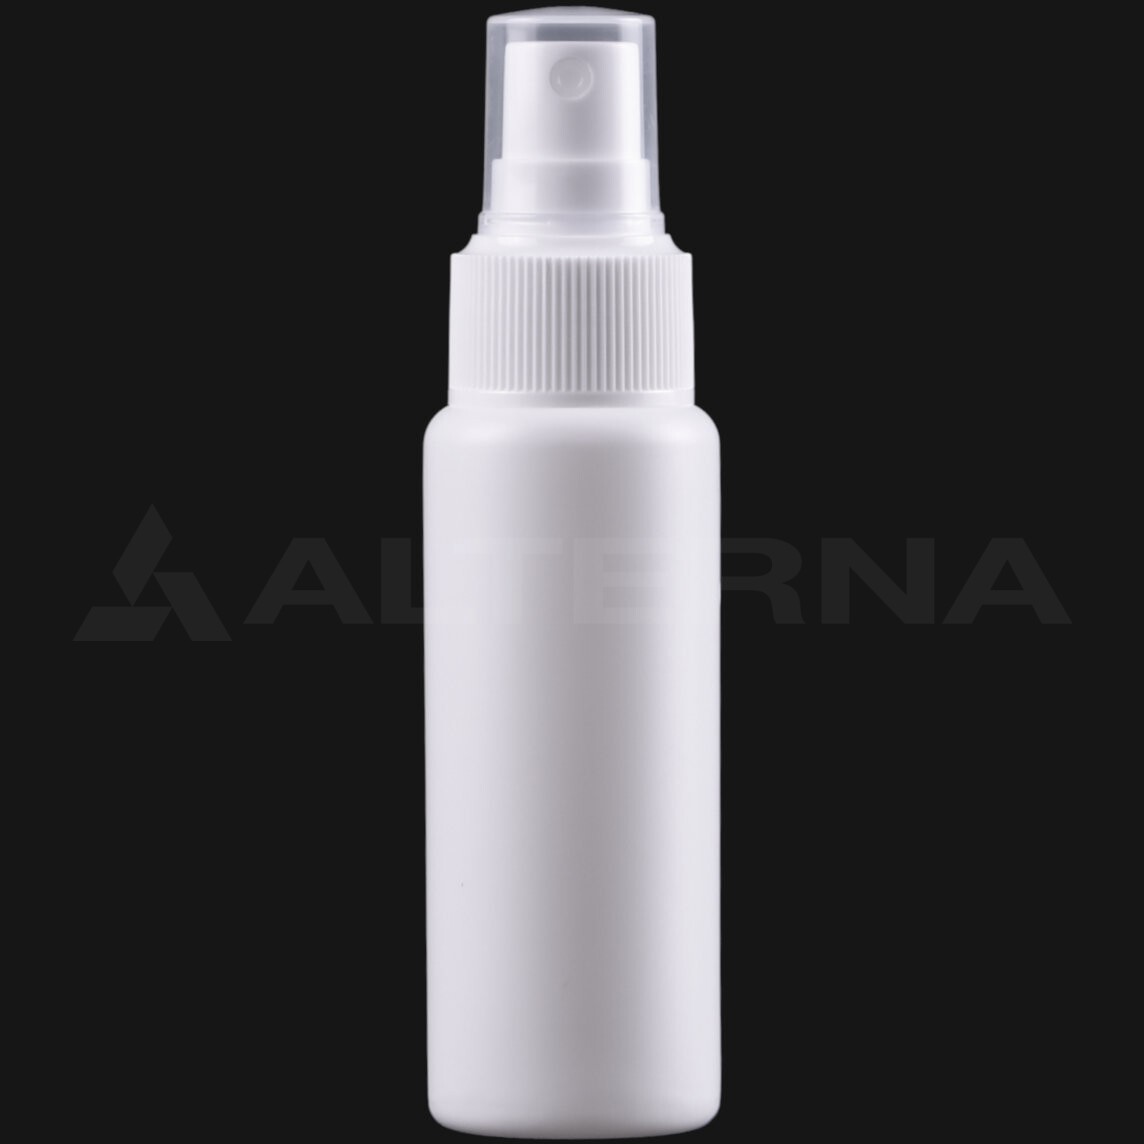 60 ml HDPE Bottle with 24 mm Sprayer